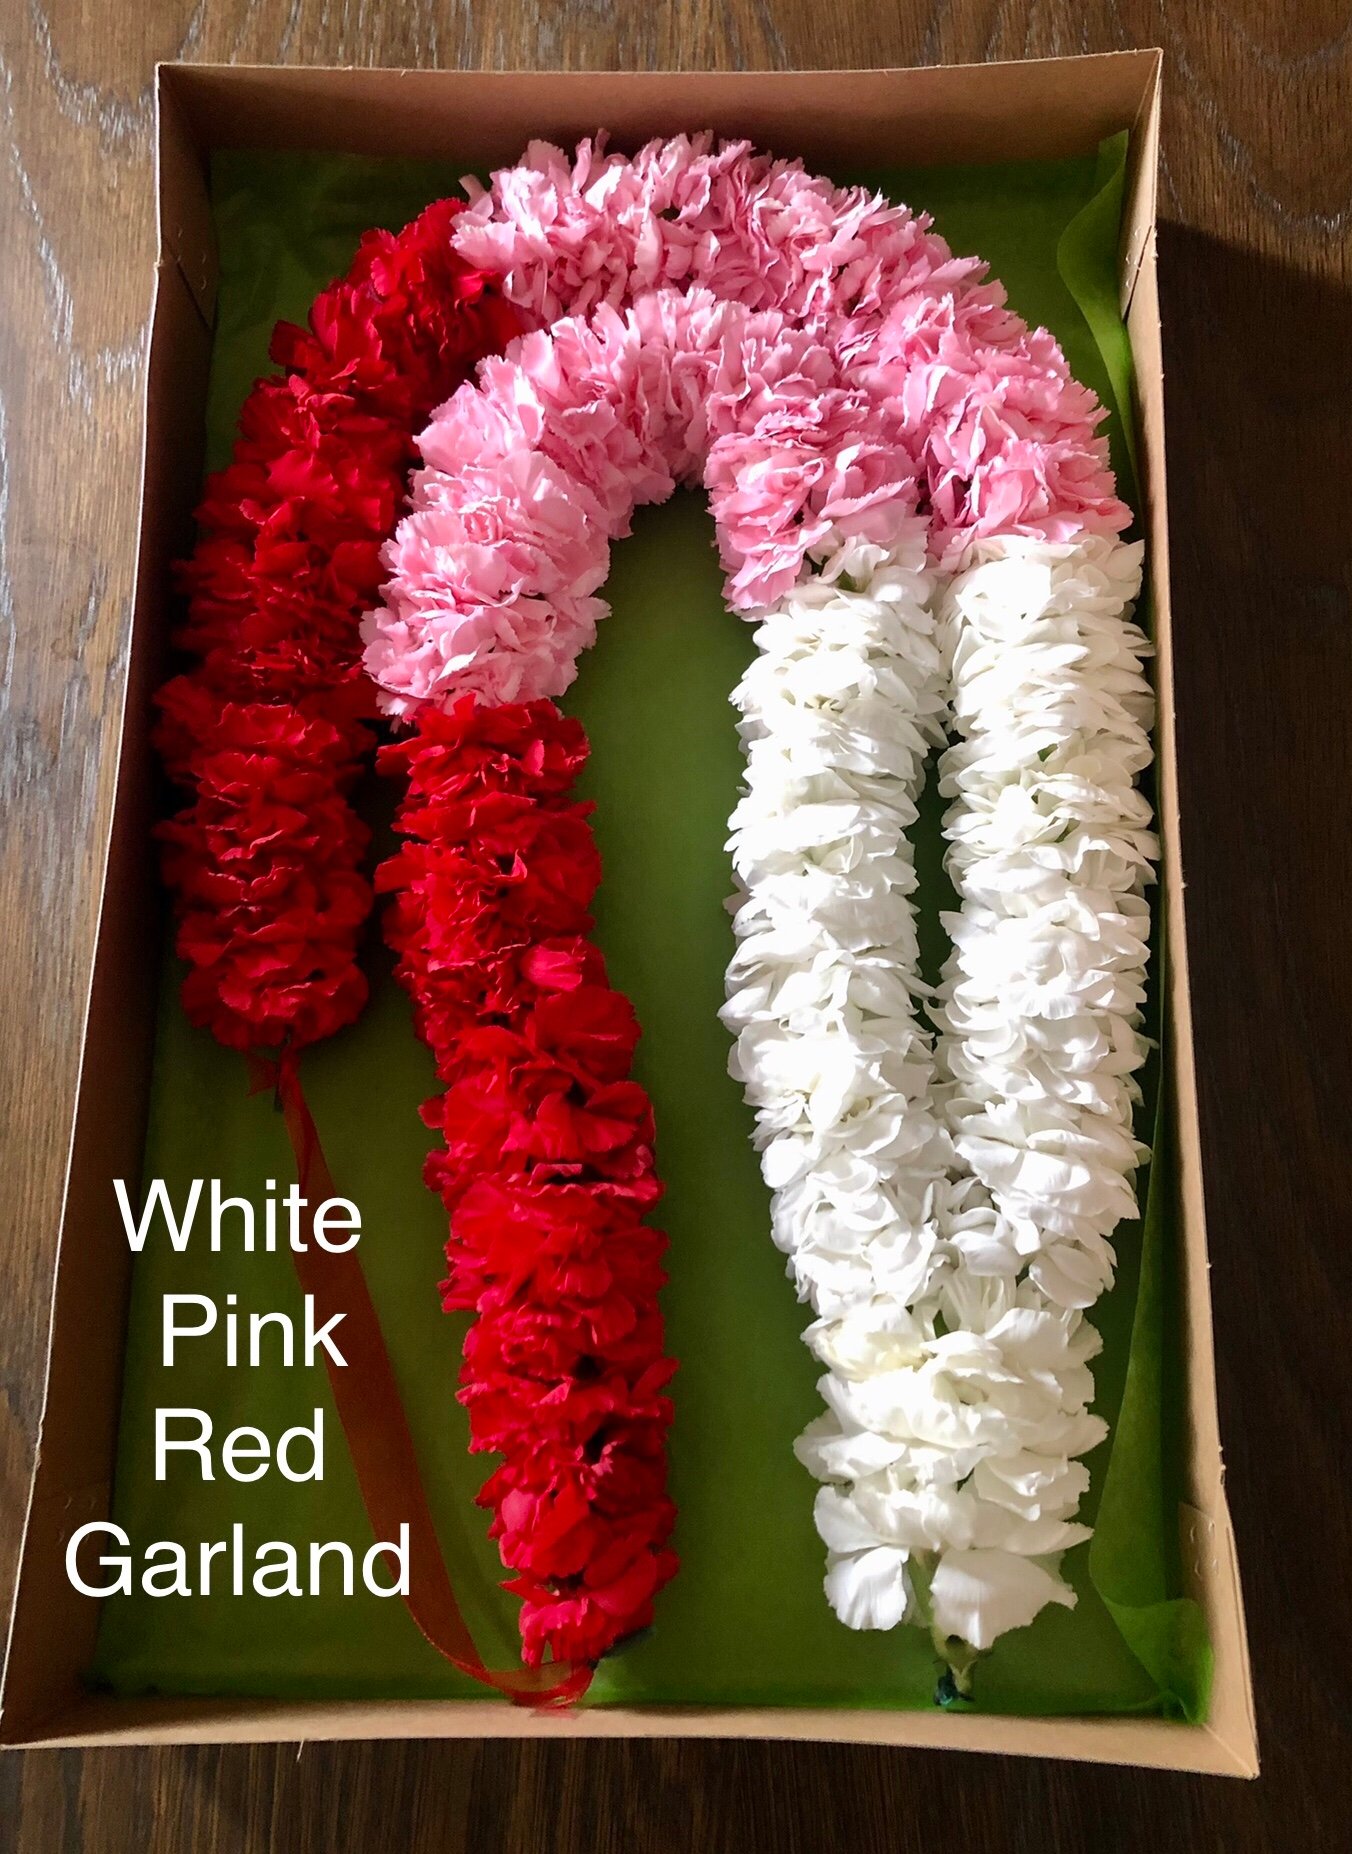 WHITE PINK RED GARLAND $87.50 